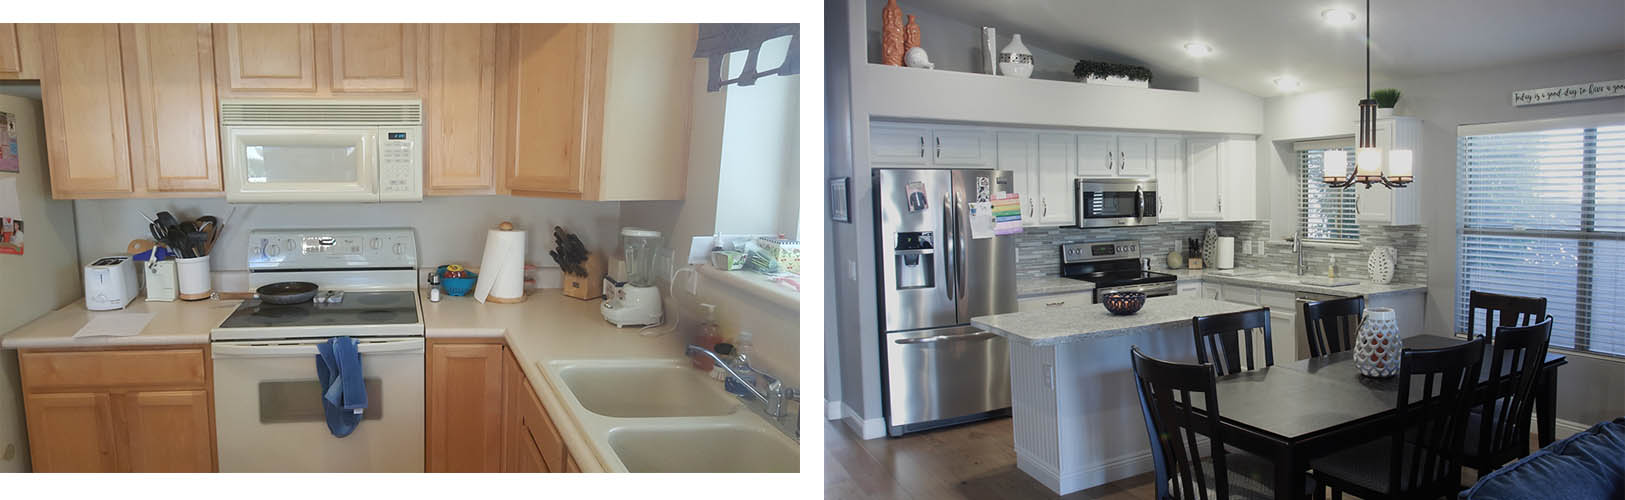 Toni-Chalik-kitchen-before-after